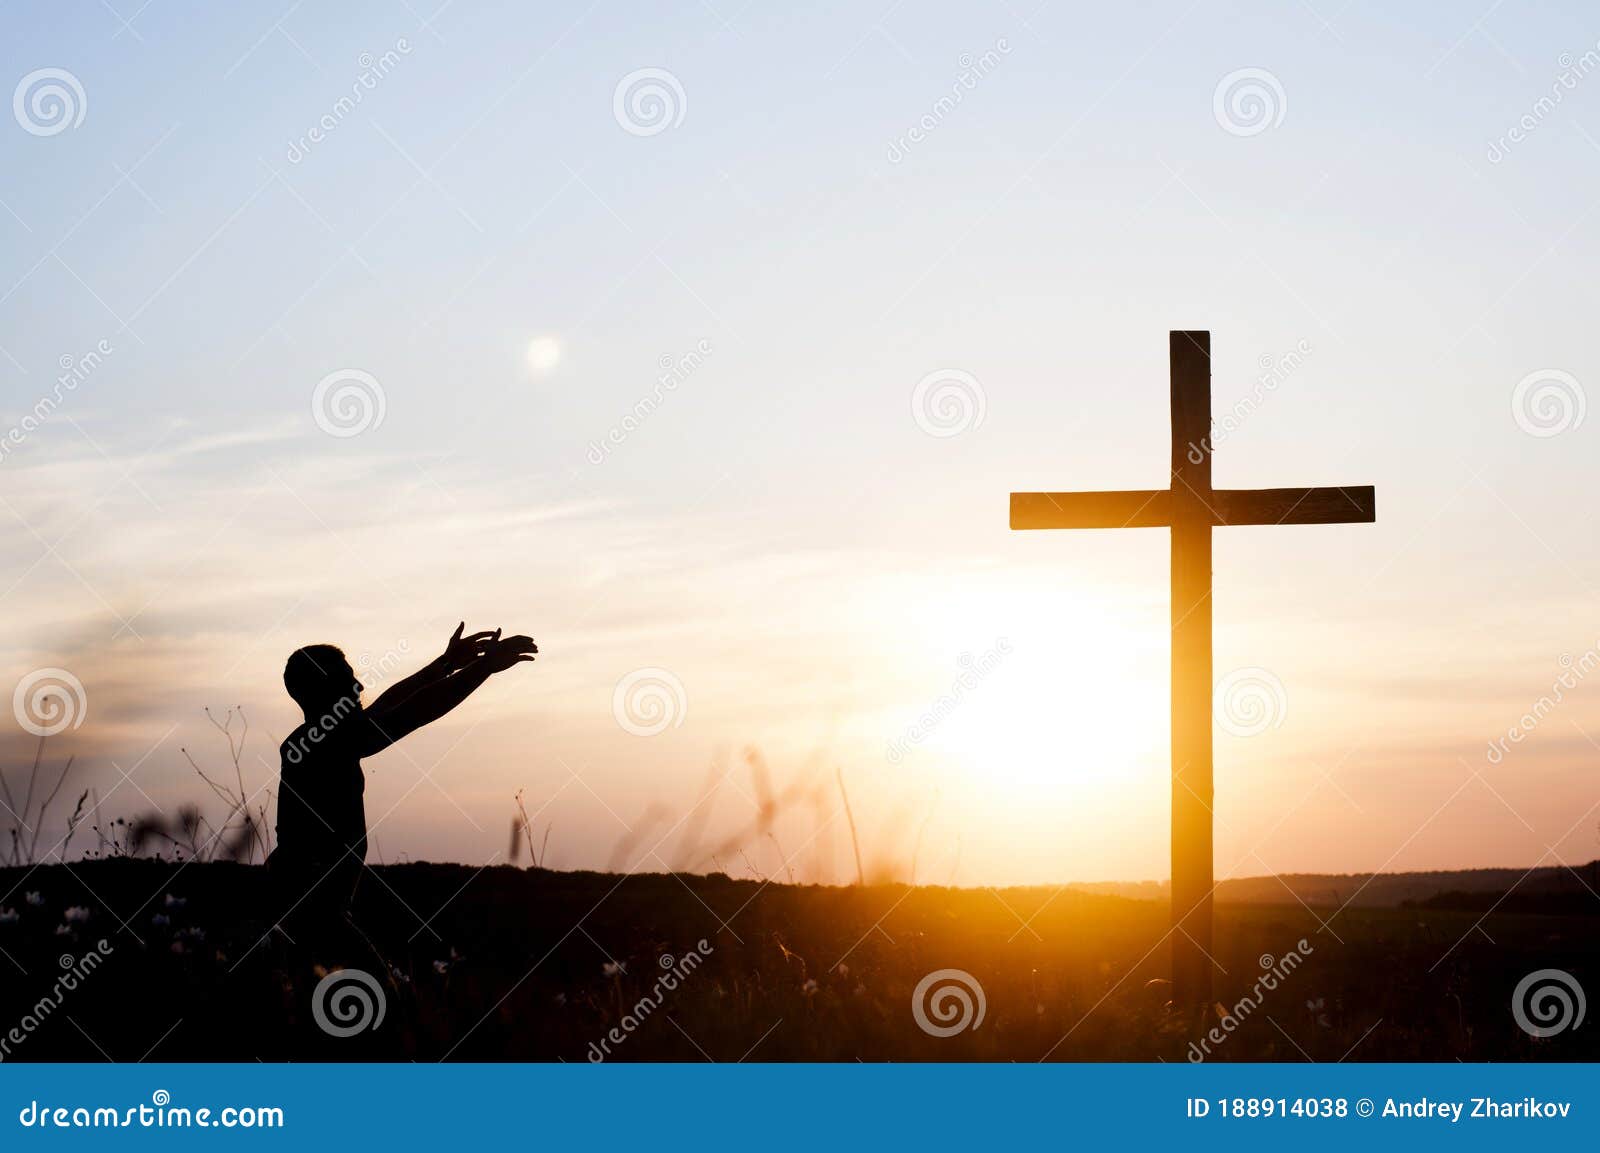 Закат как коленочки. Силуэт Креста на фоне неба. Крест в небе. Мужик с крестом. Человек на коленях на фоне Креста.